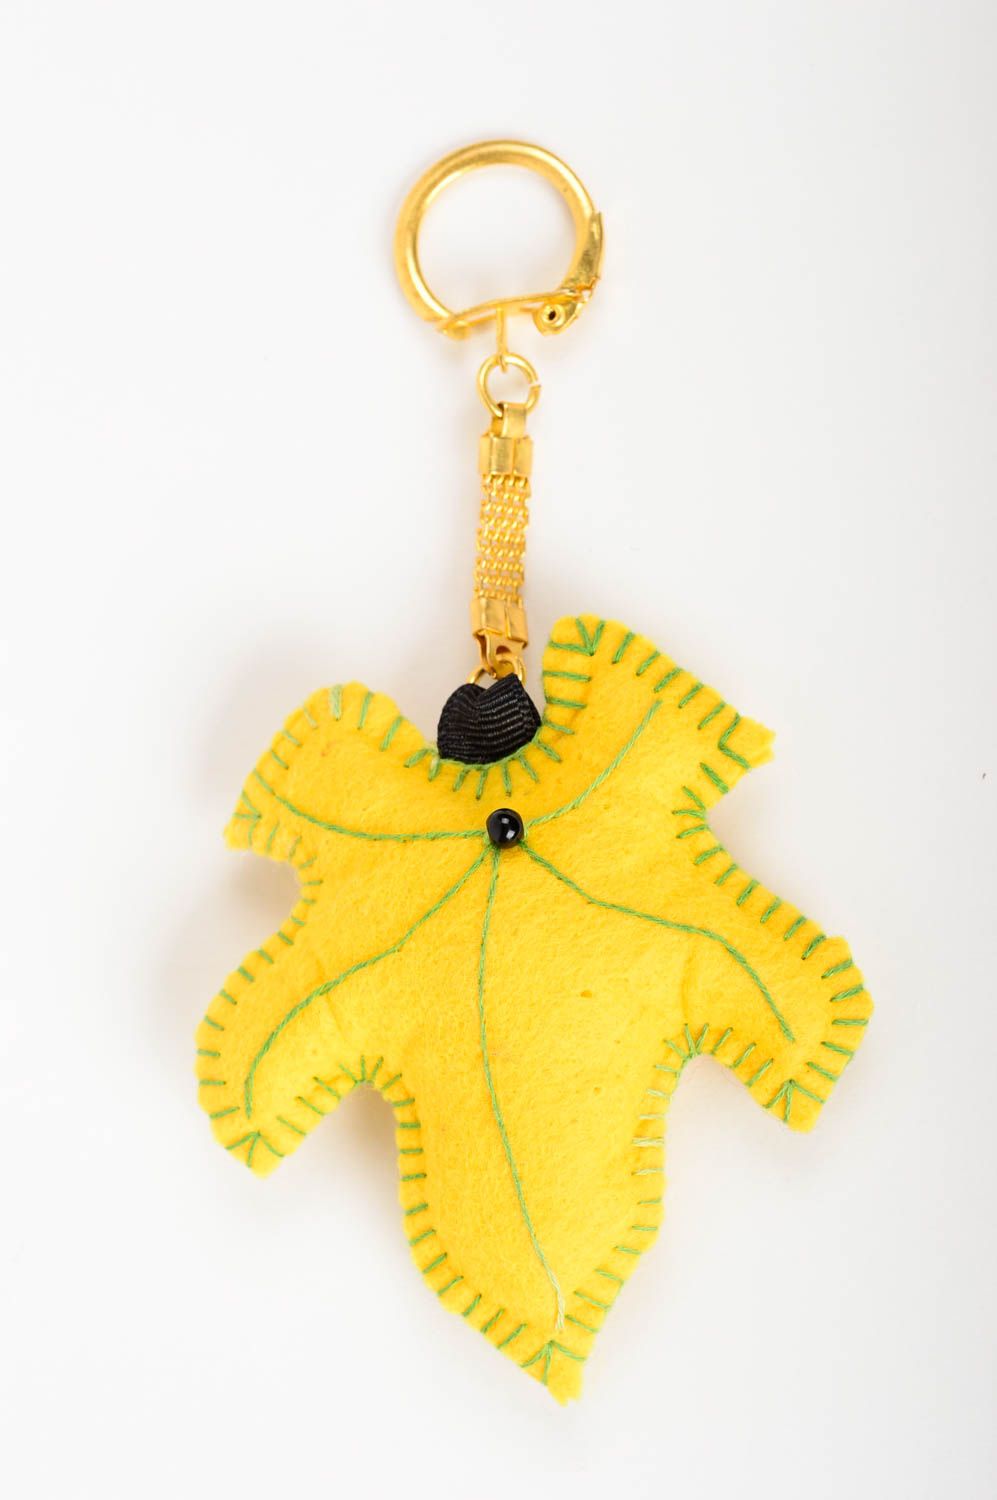 Textil Schlüsselanhänger Blatt in Gelb originell grell handmade aus Filz foto 1